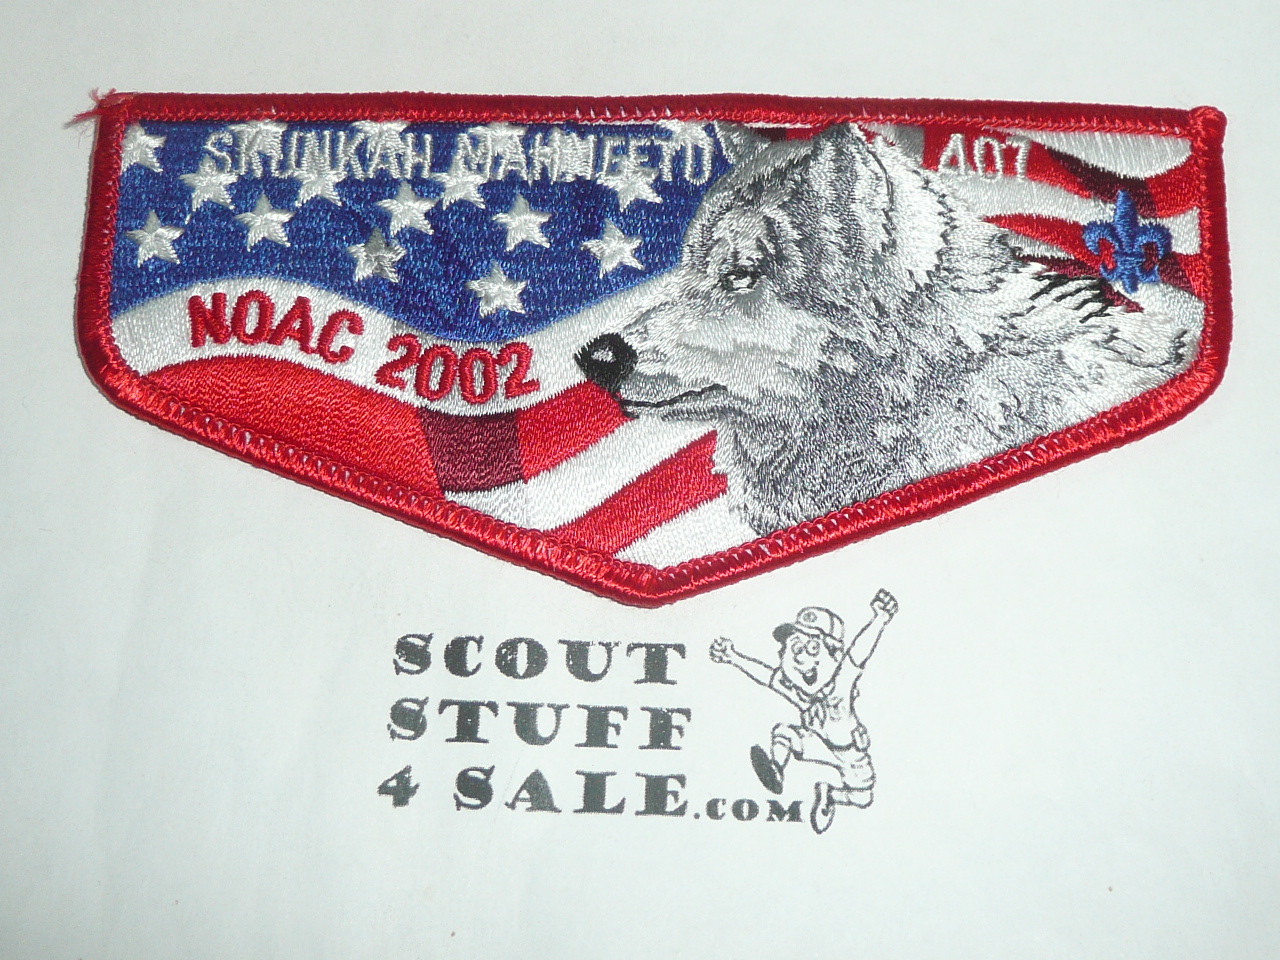 Order of the Arrow Lodge #407 Shunkah Mahneetu s20 2002 NOAC Flap Patch